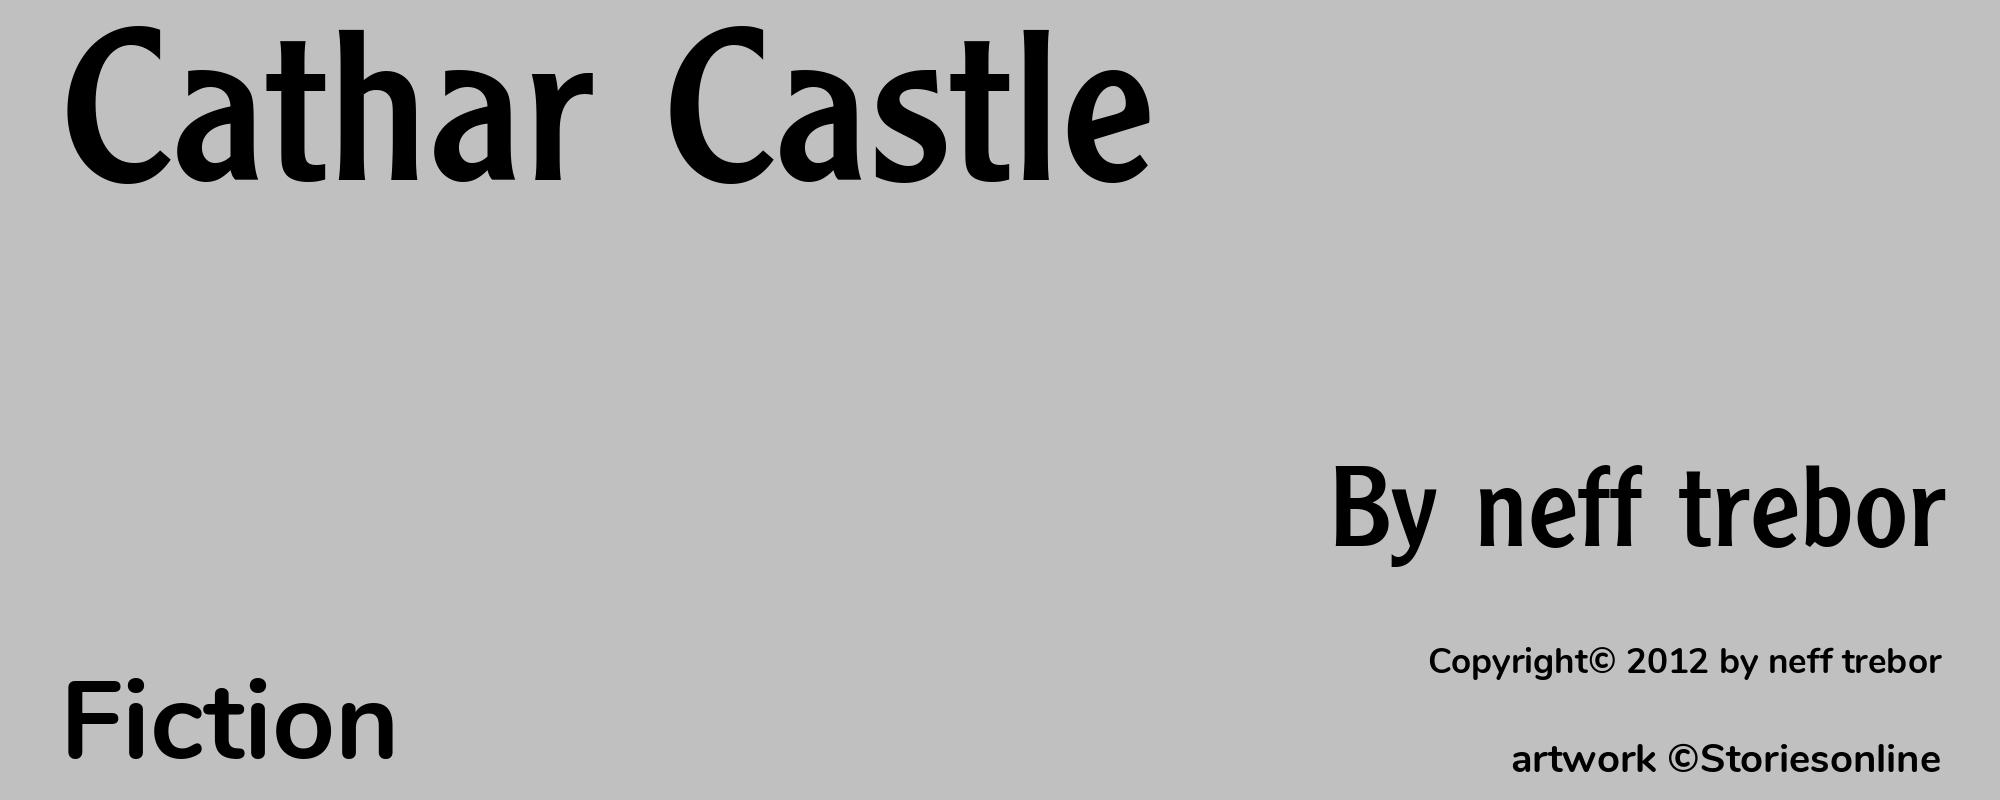 Cathar Castle - Cover